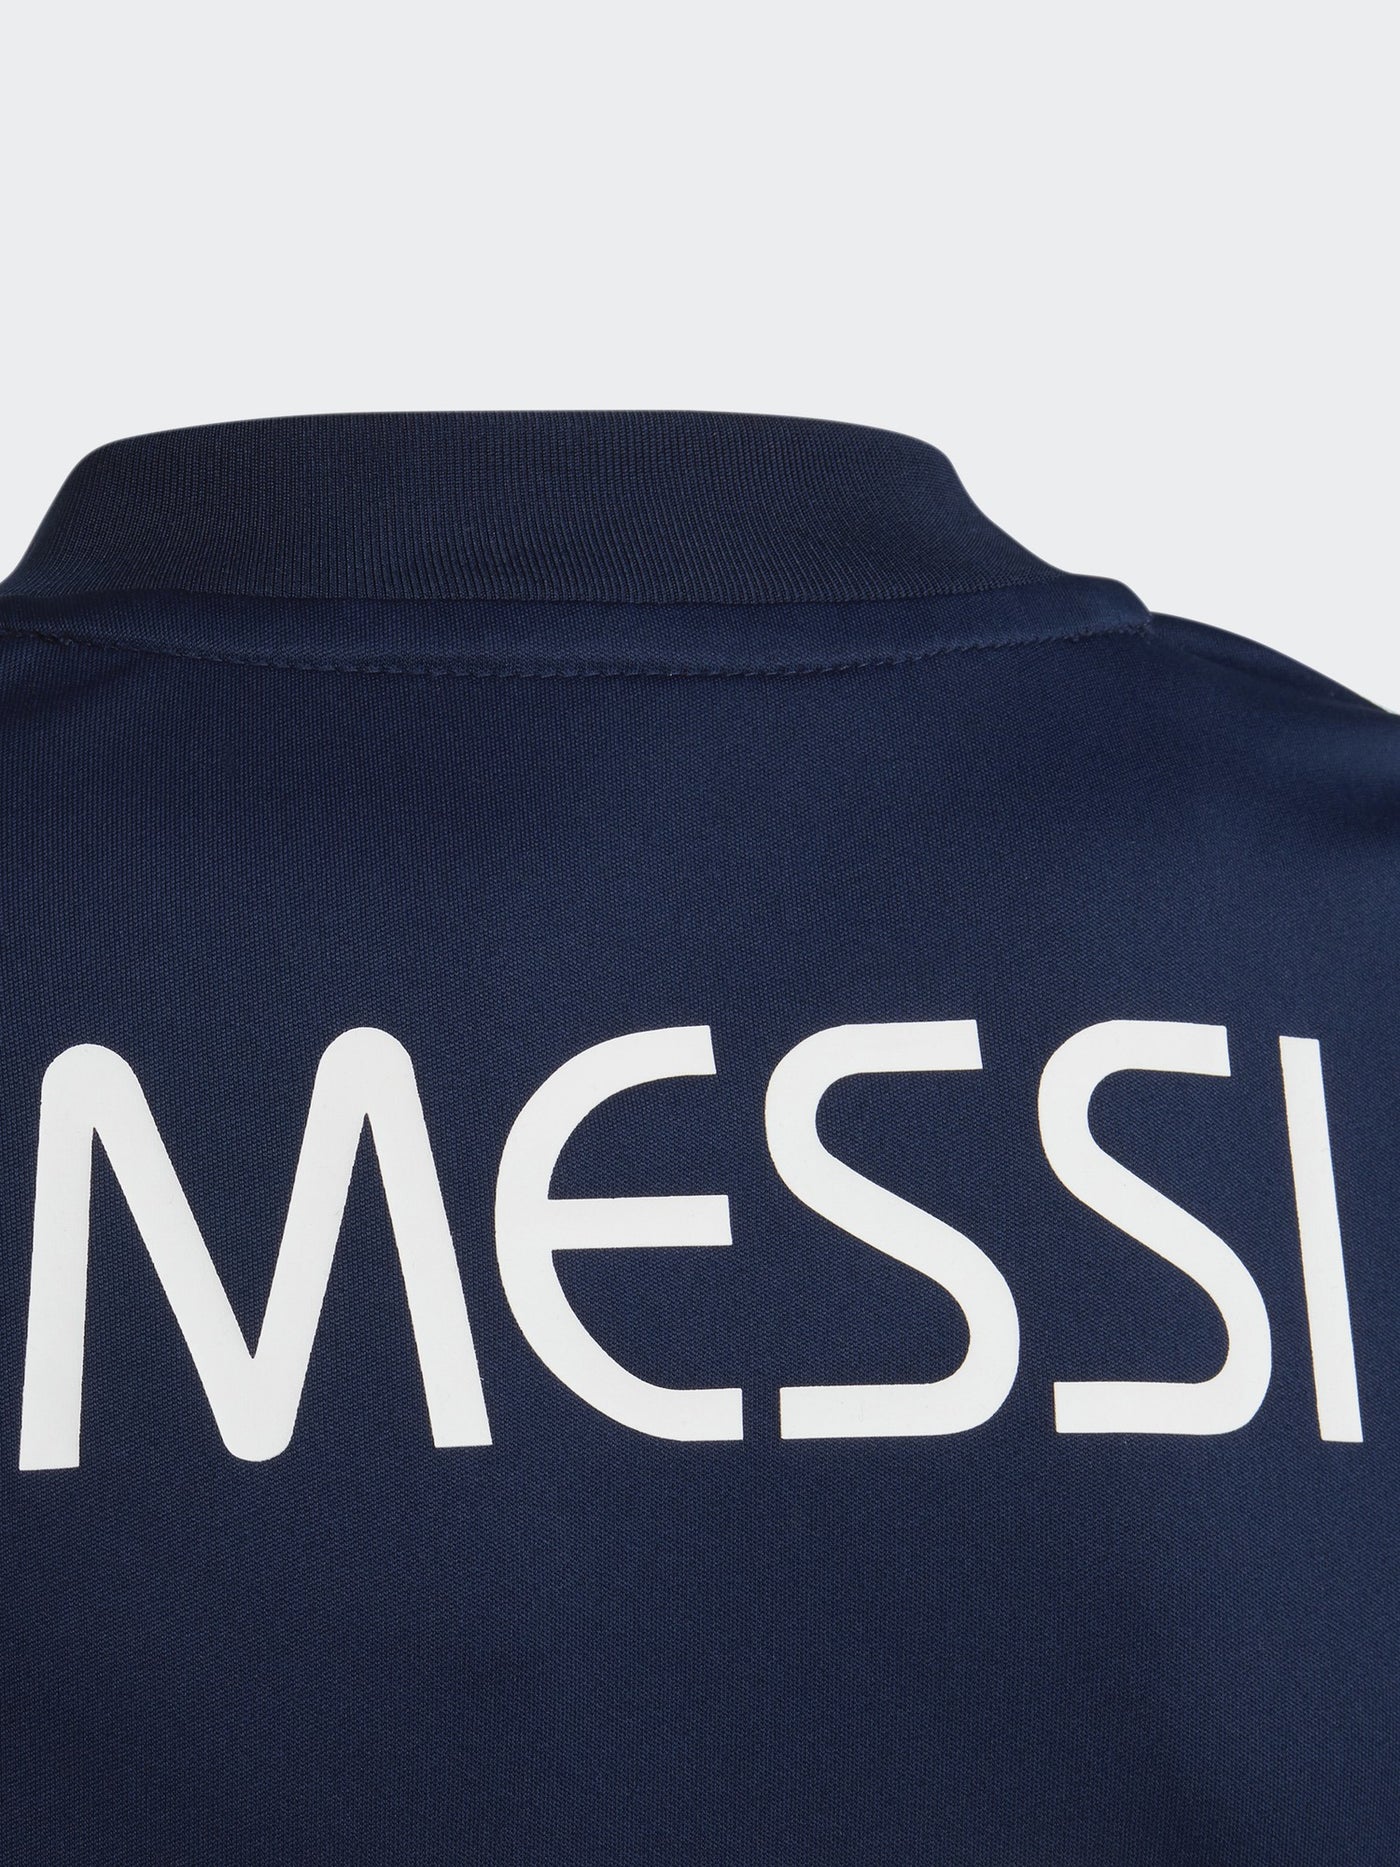 adidas Junior Unisex Messi Tiro Number 10 Training Jersey